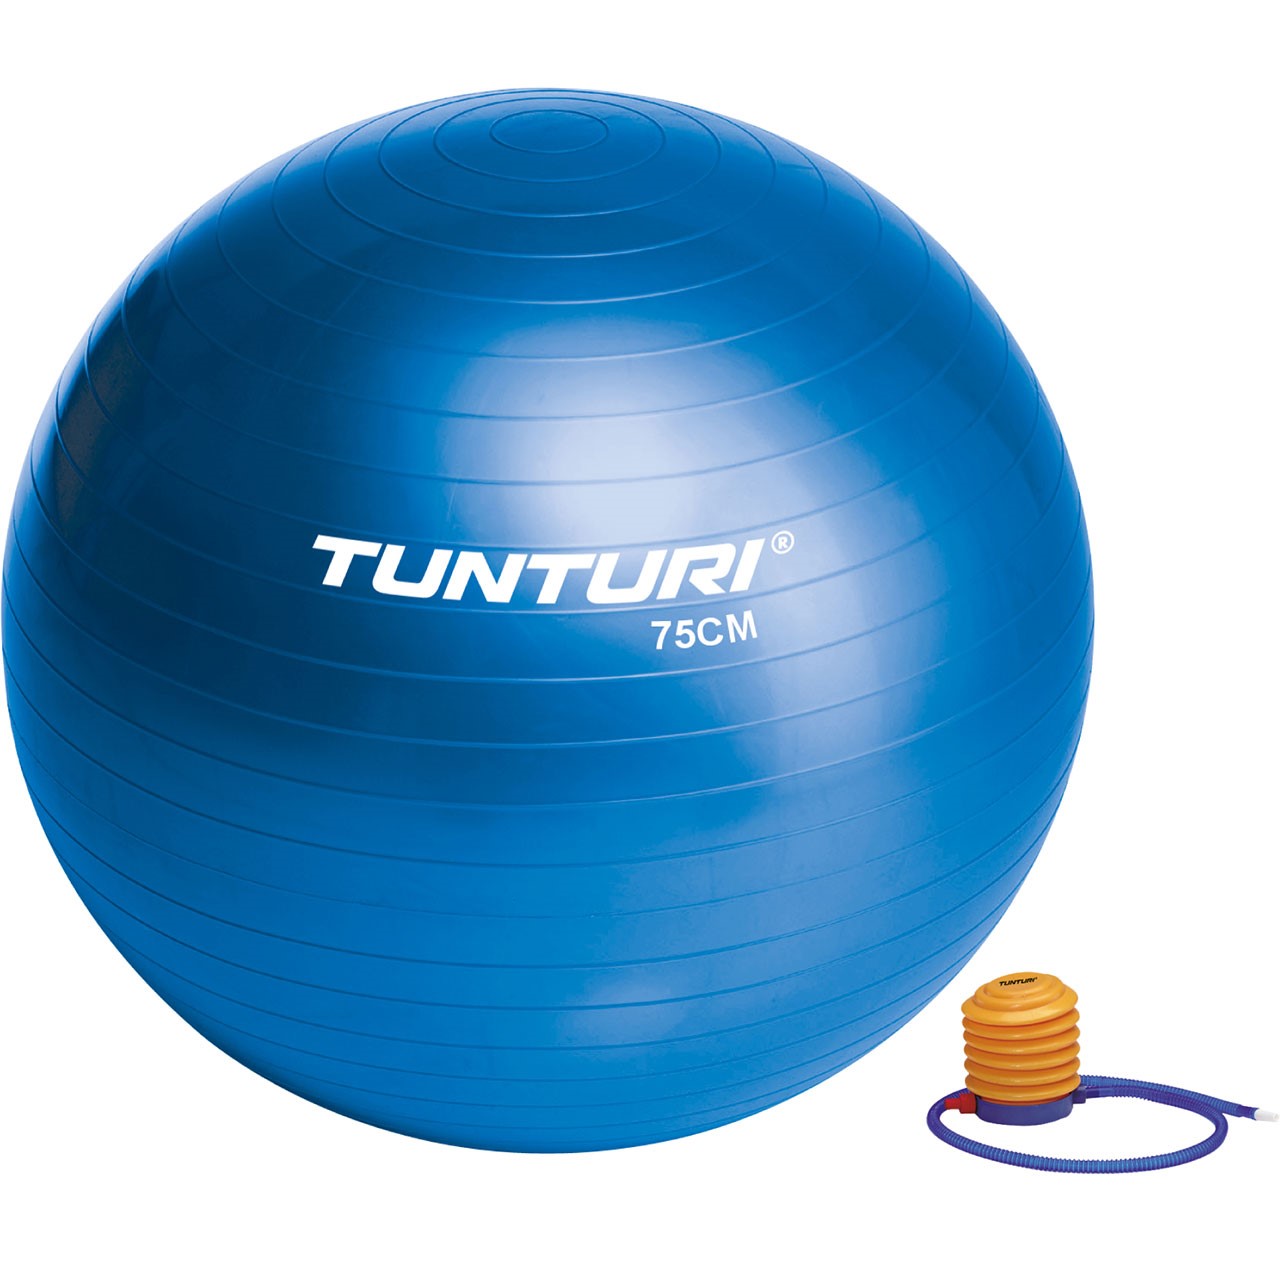 Tunturi Gym Ball - Gymnastikball Sitzball 75 cm